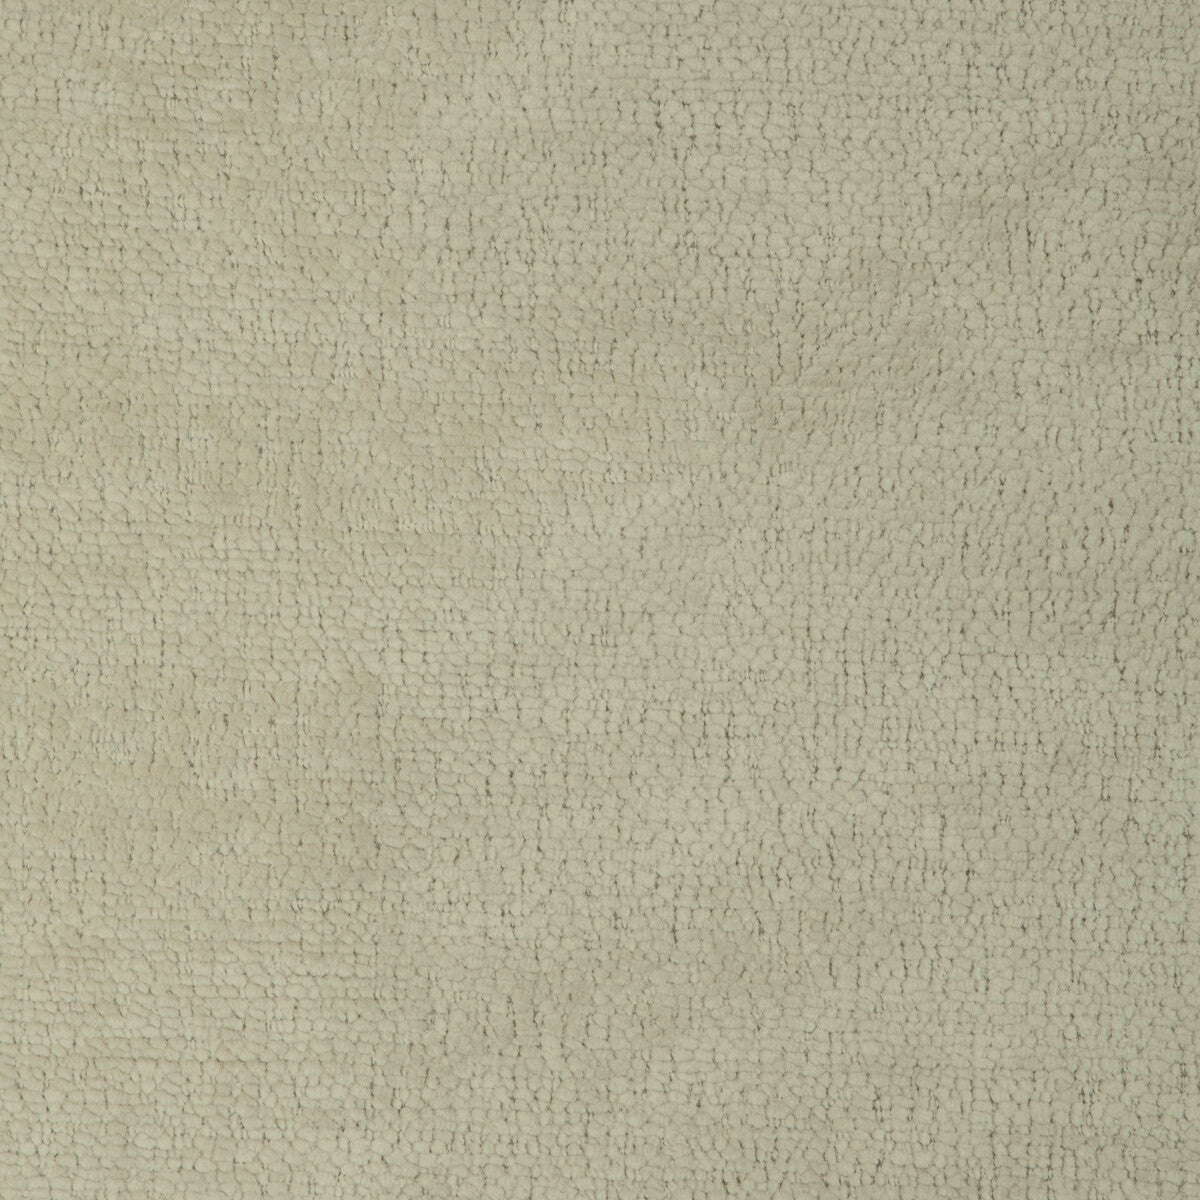 Kravet Smart fabric in 36997-16 color - pattern 36997.16.0 - by Kravet Smart